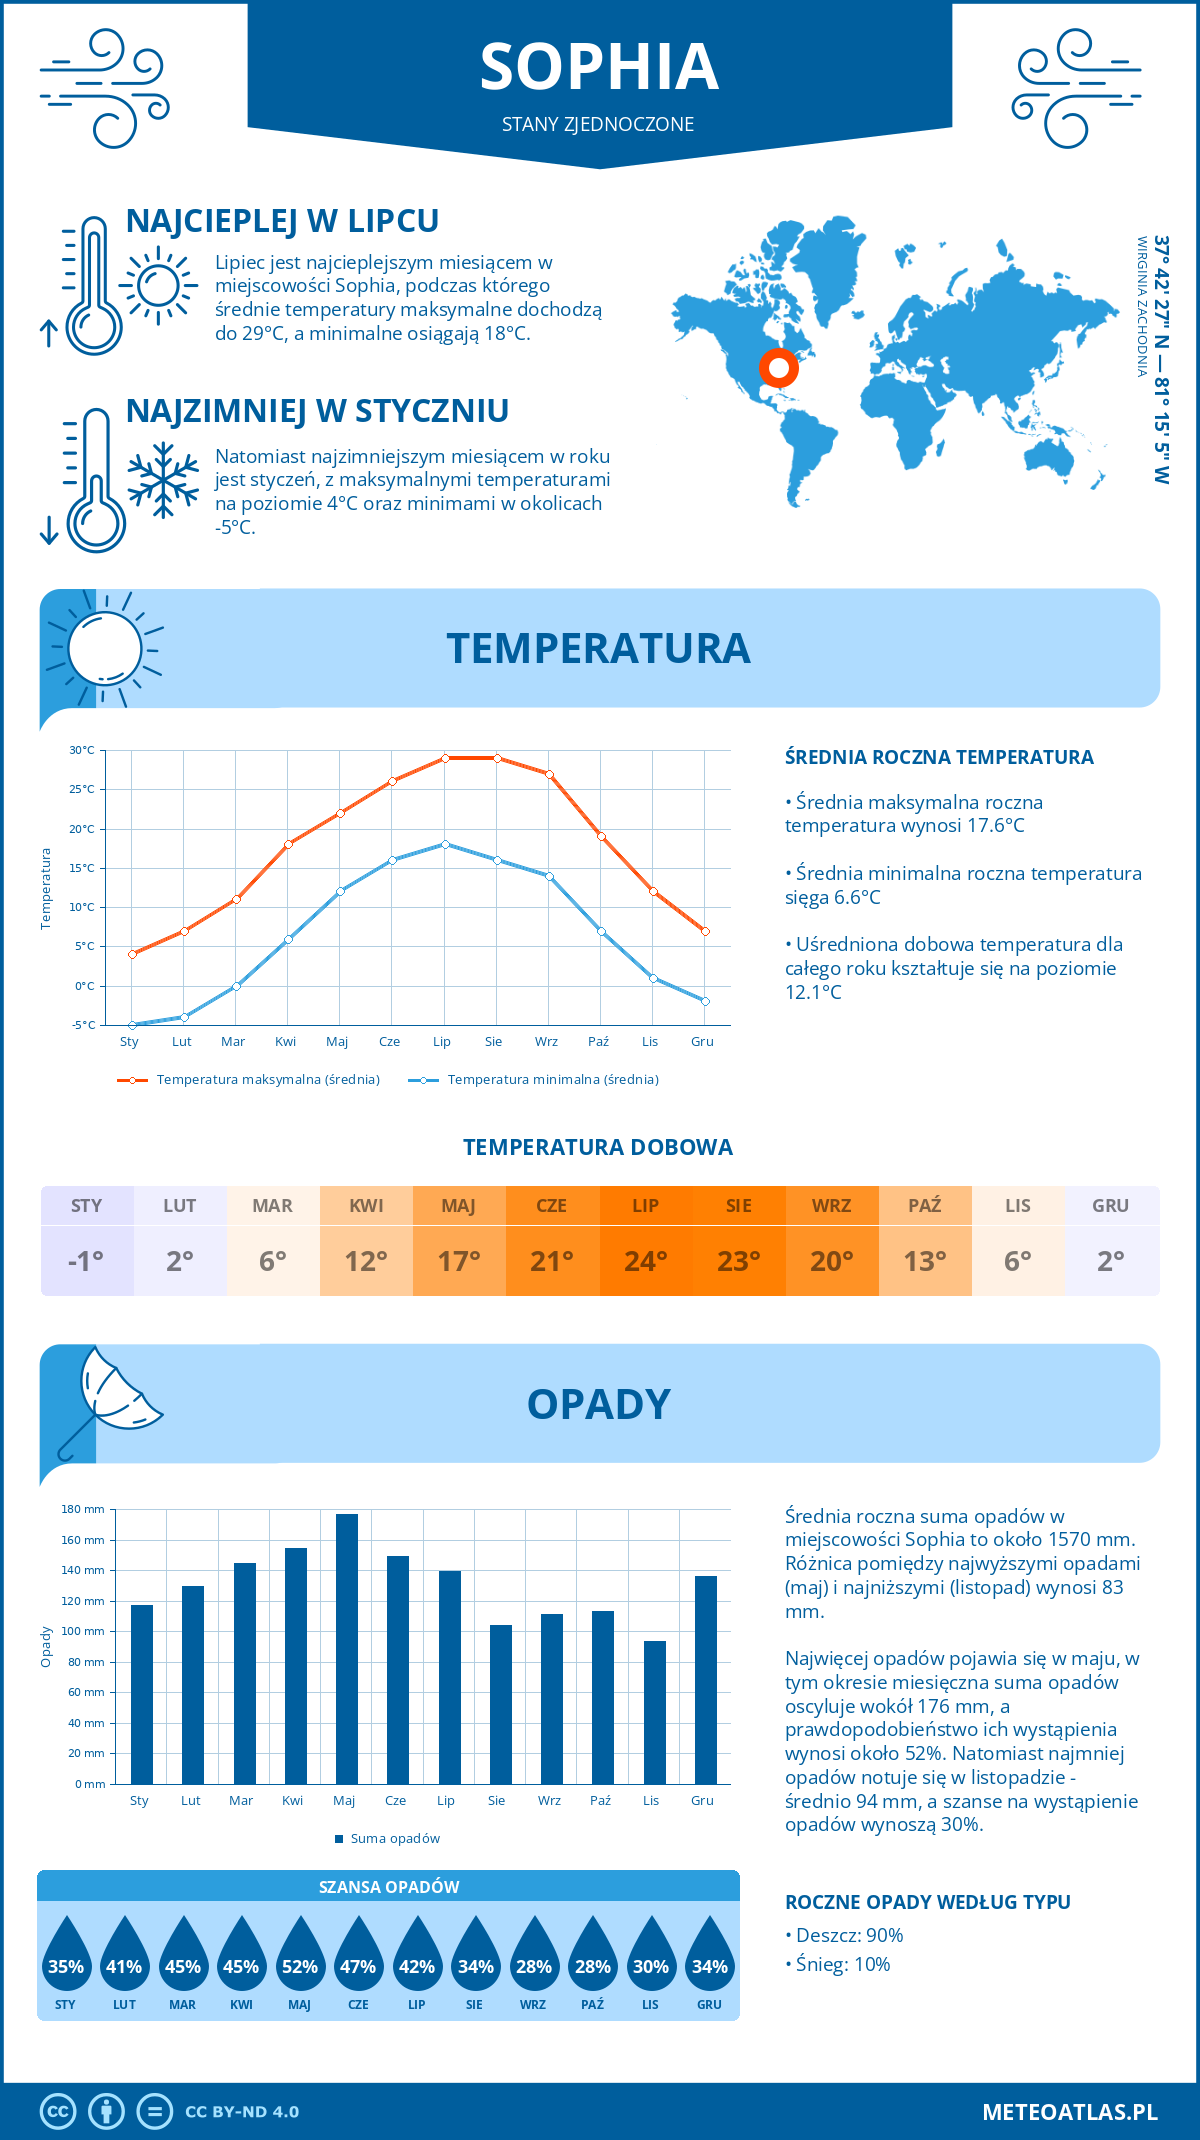 Pogoda Sophia (Stany Zjednoczone). Temperatura oraz opady.